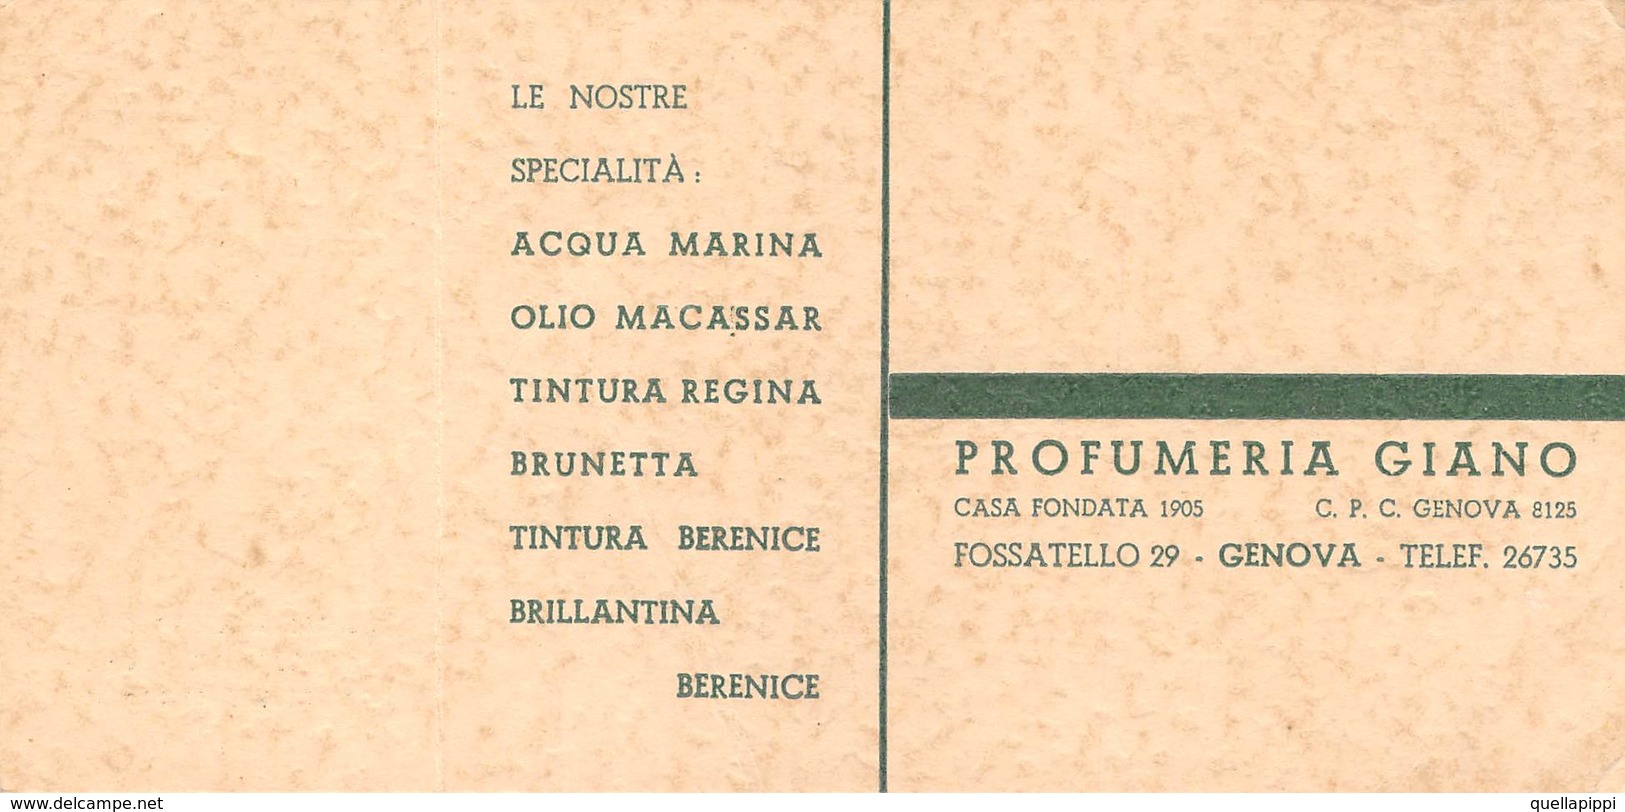 08012 "PROFUMERIA GIANO FONDATA 1905 - GENOVA" CART. DA VISISTA ORIG. 1950 CIRCA - Cartoncini Da Visita